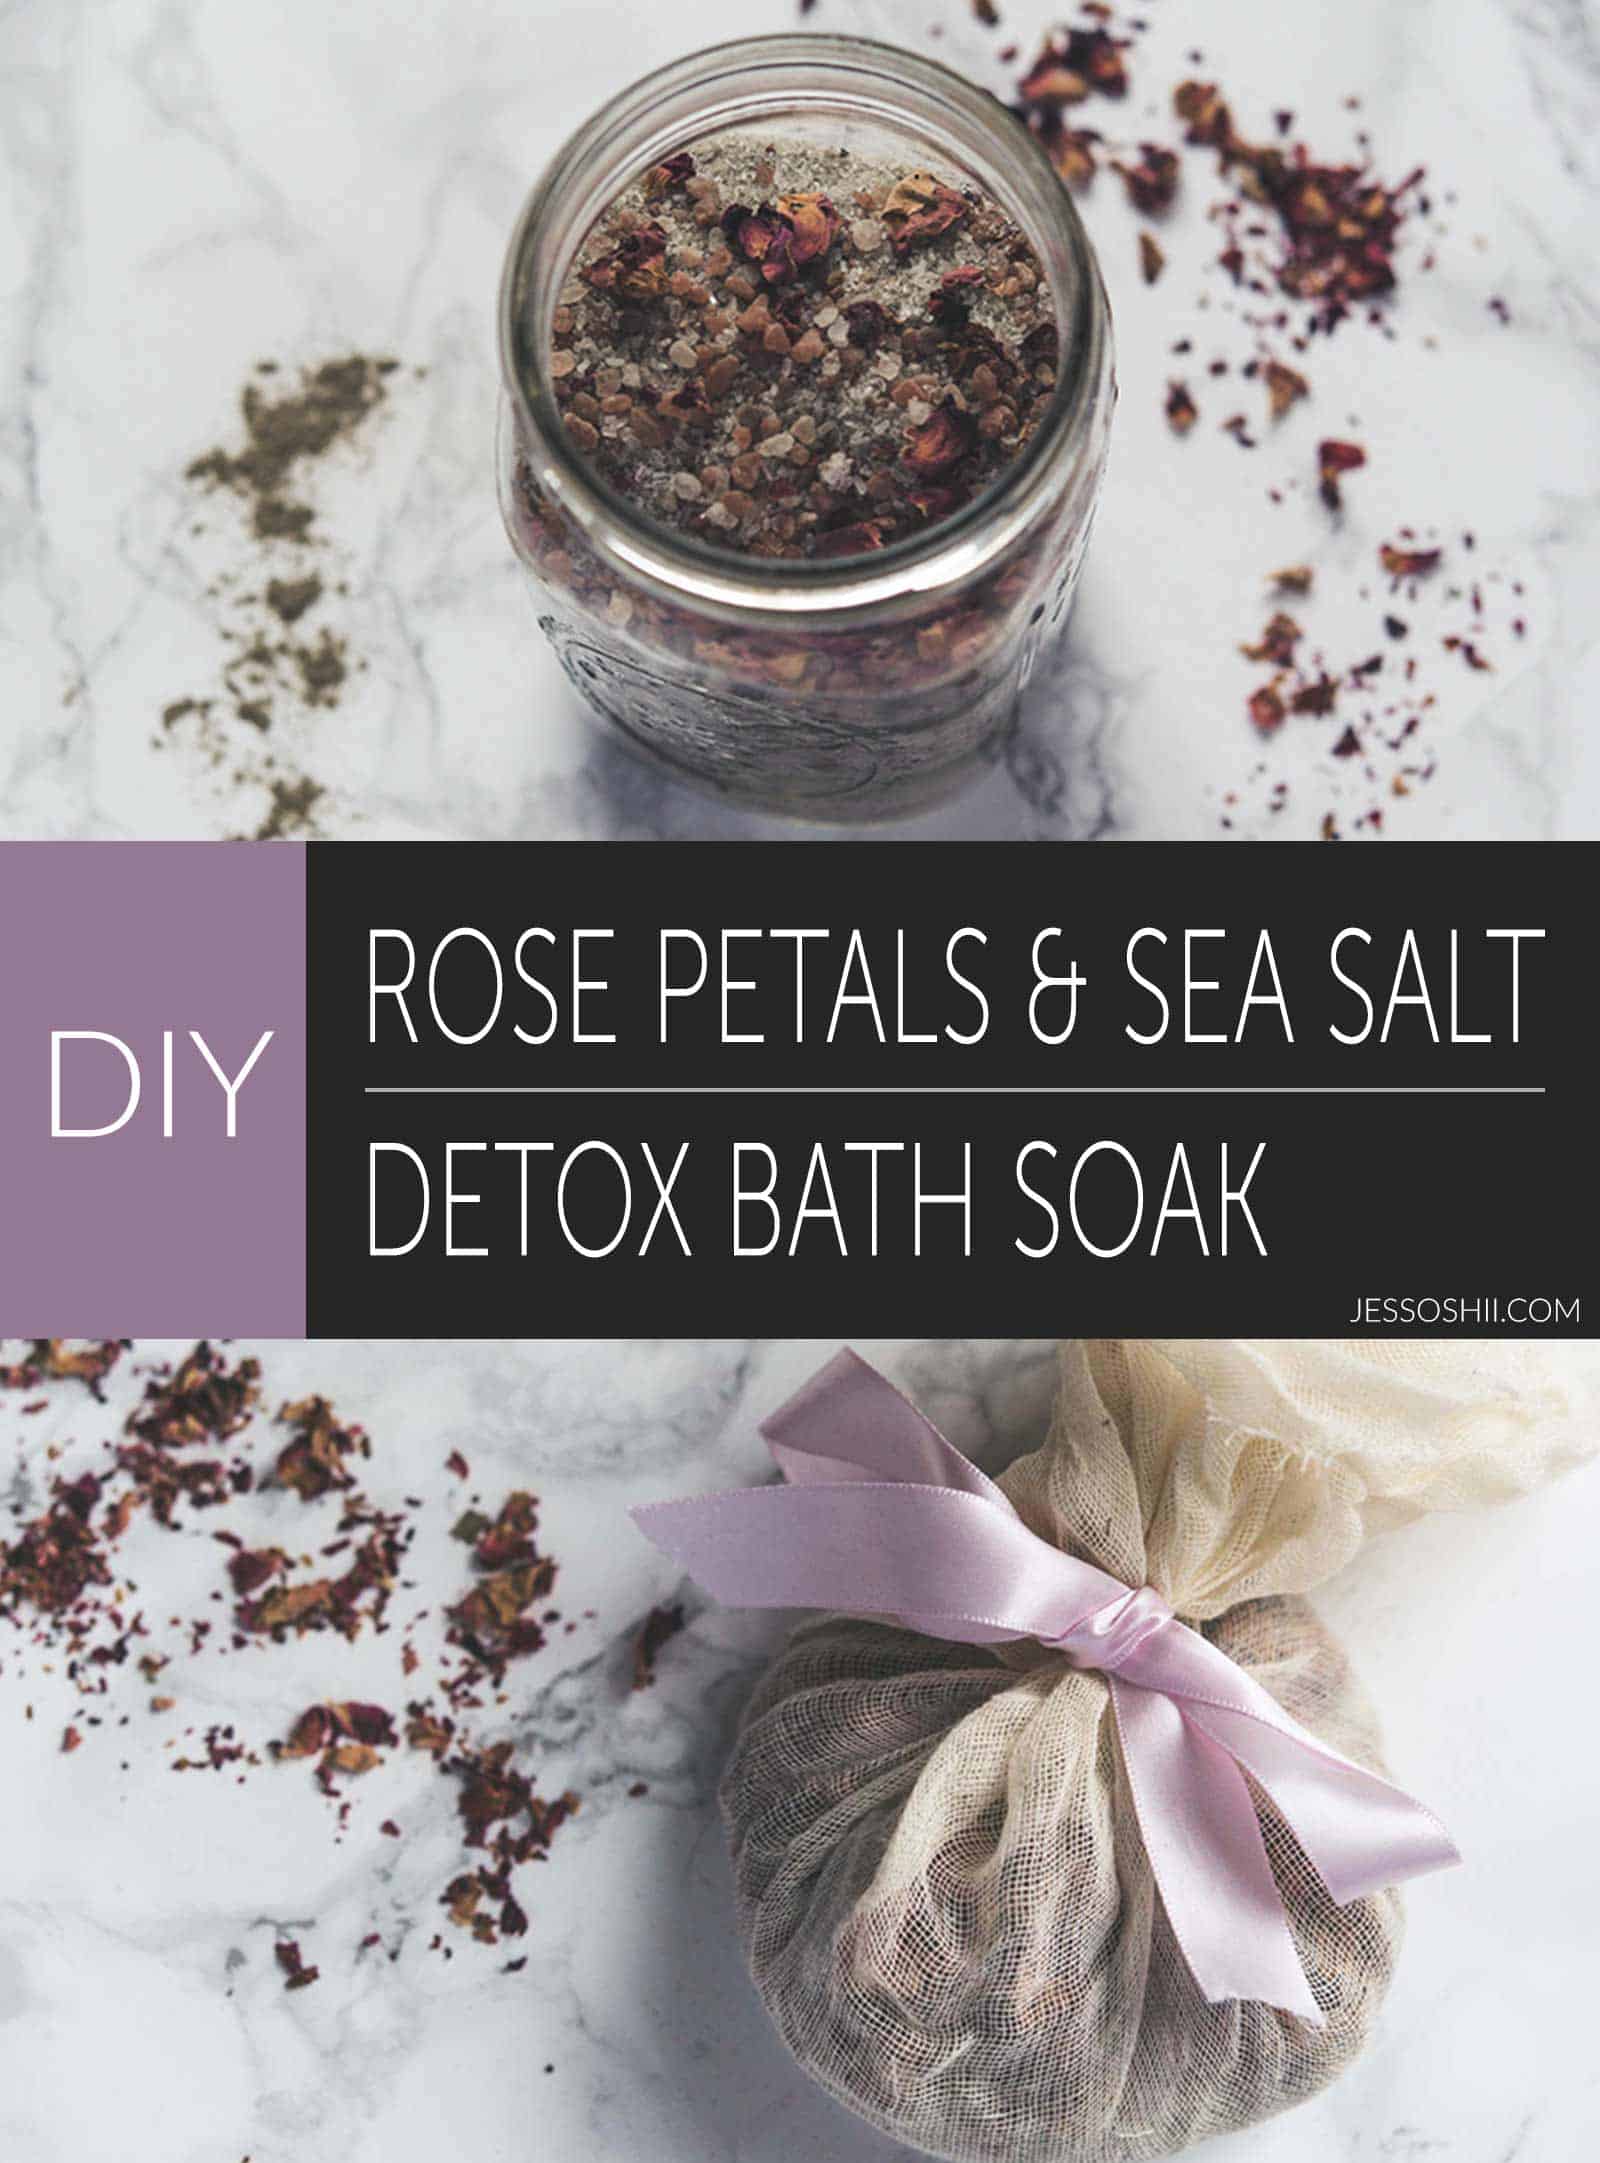 Diy pétales de rose sel de mer désintoxication bain tremper tutoriel